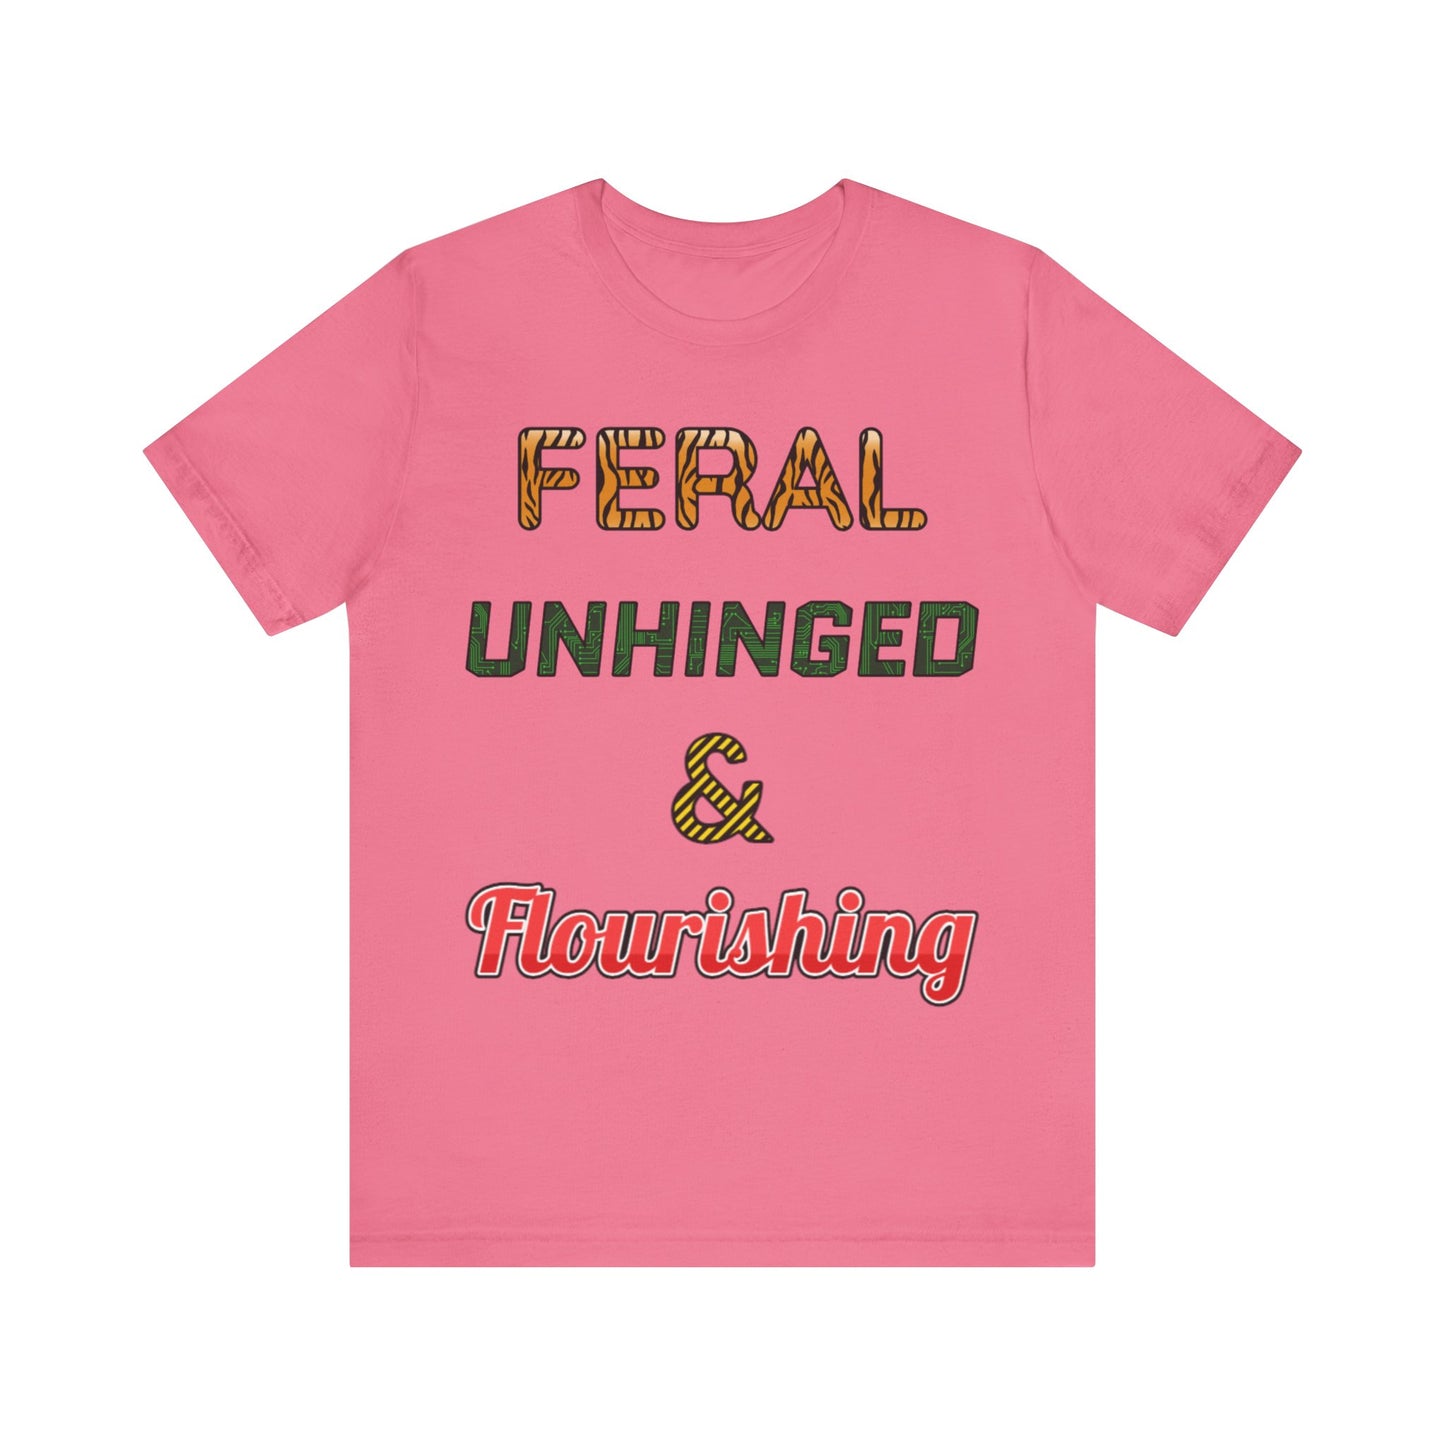 Feral, Unhinged, and Flourishing Unisex Tee